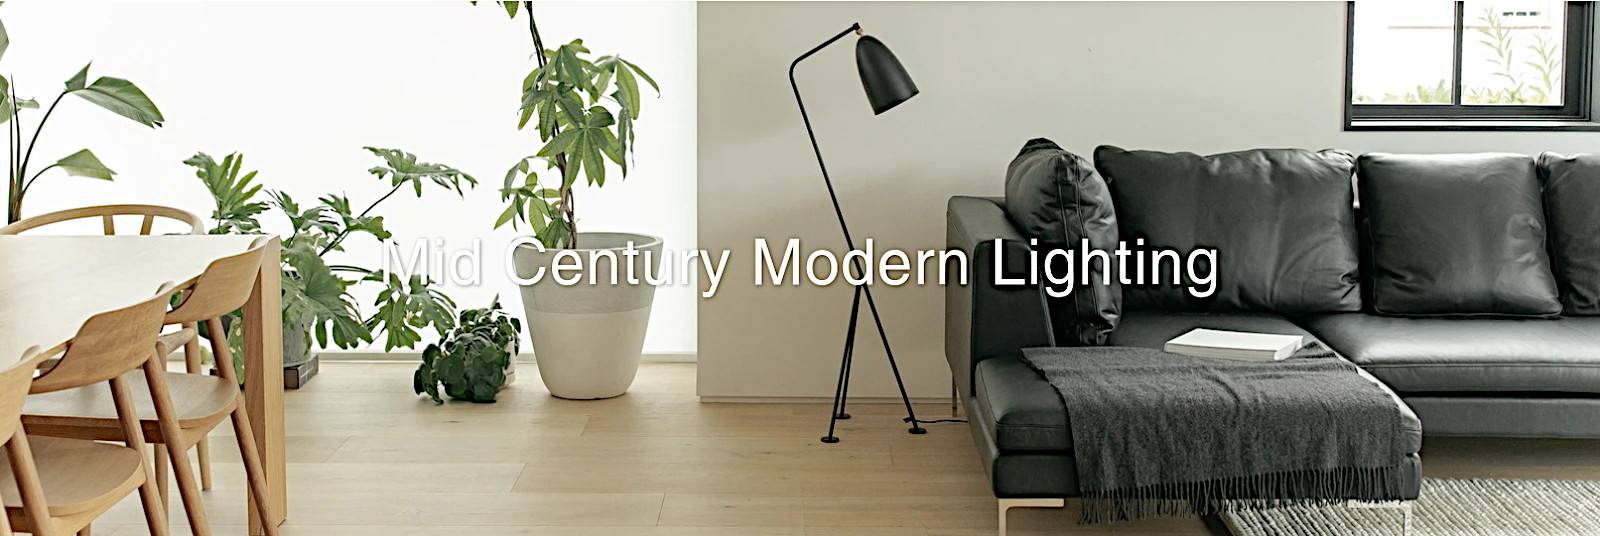 mid century modern lighting discount rate